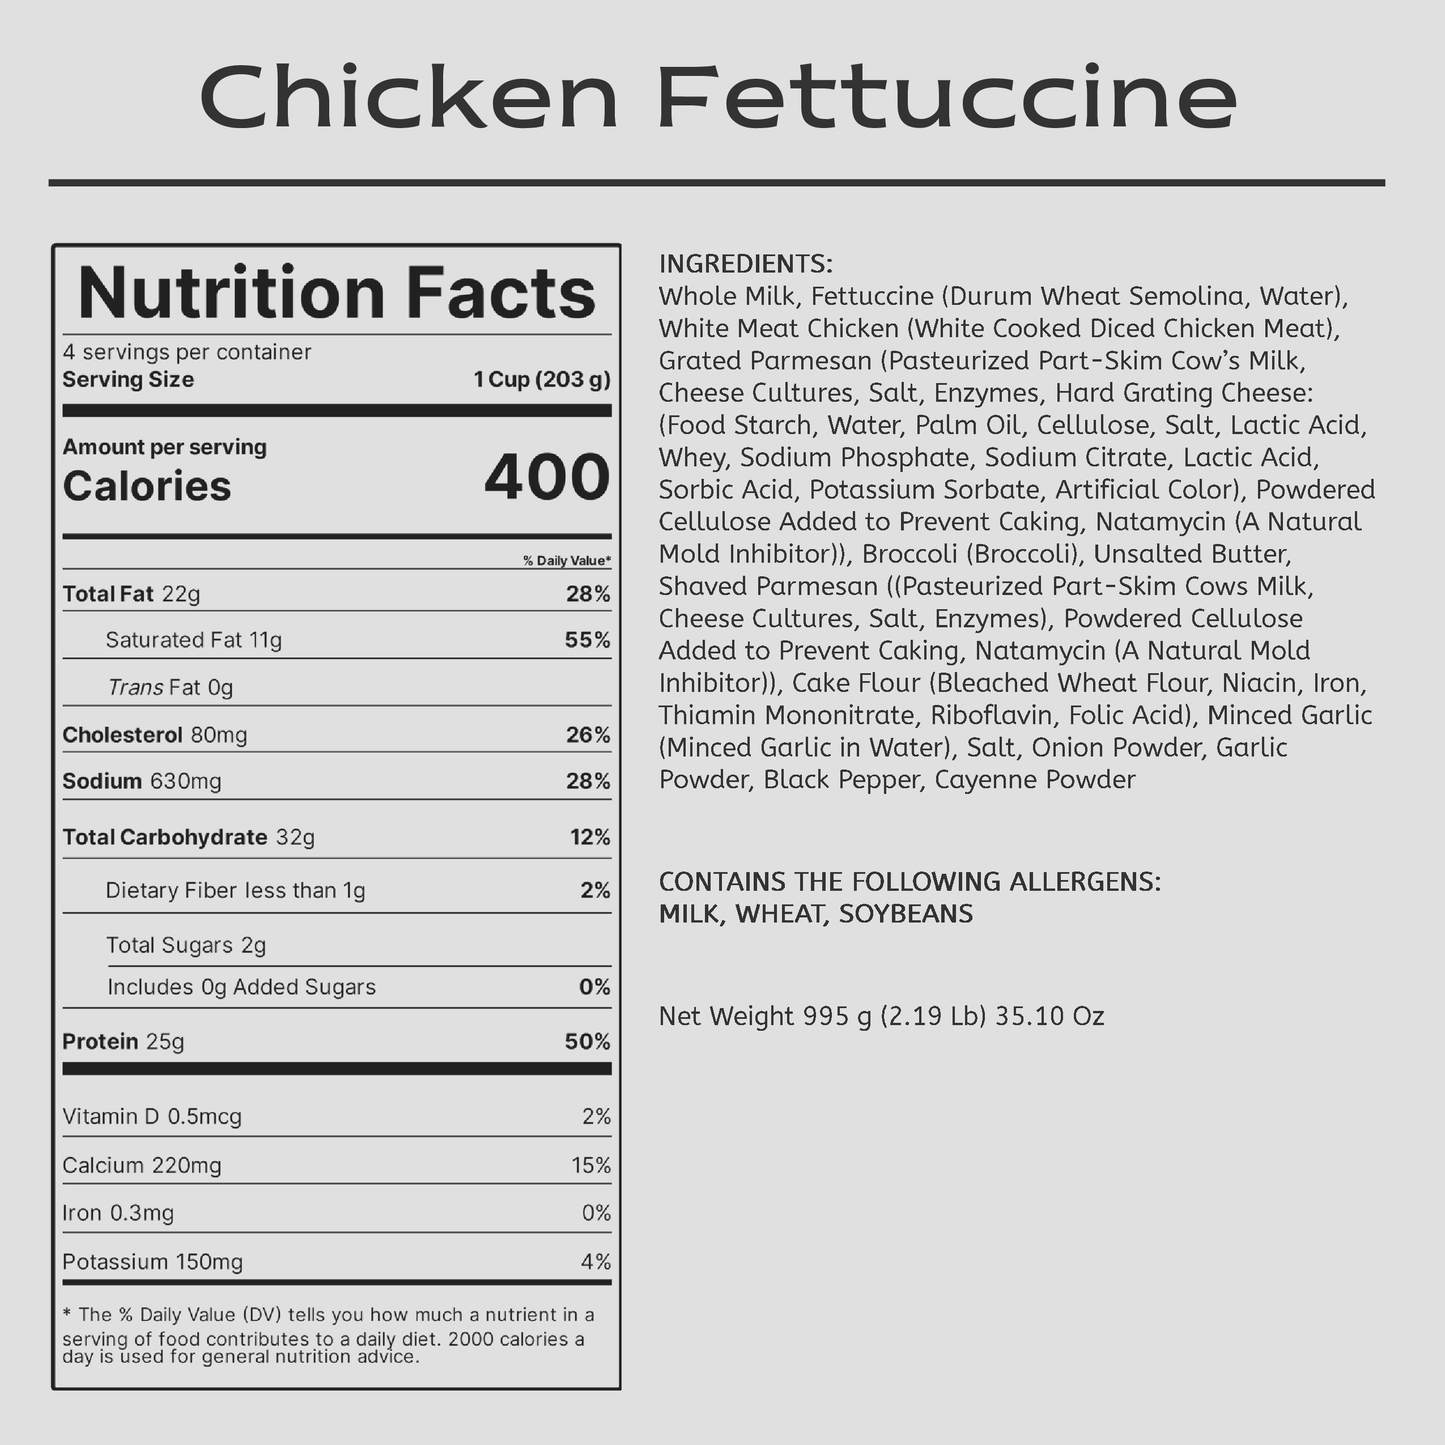 Chicken Fettuccine